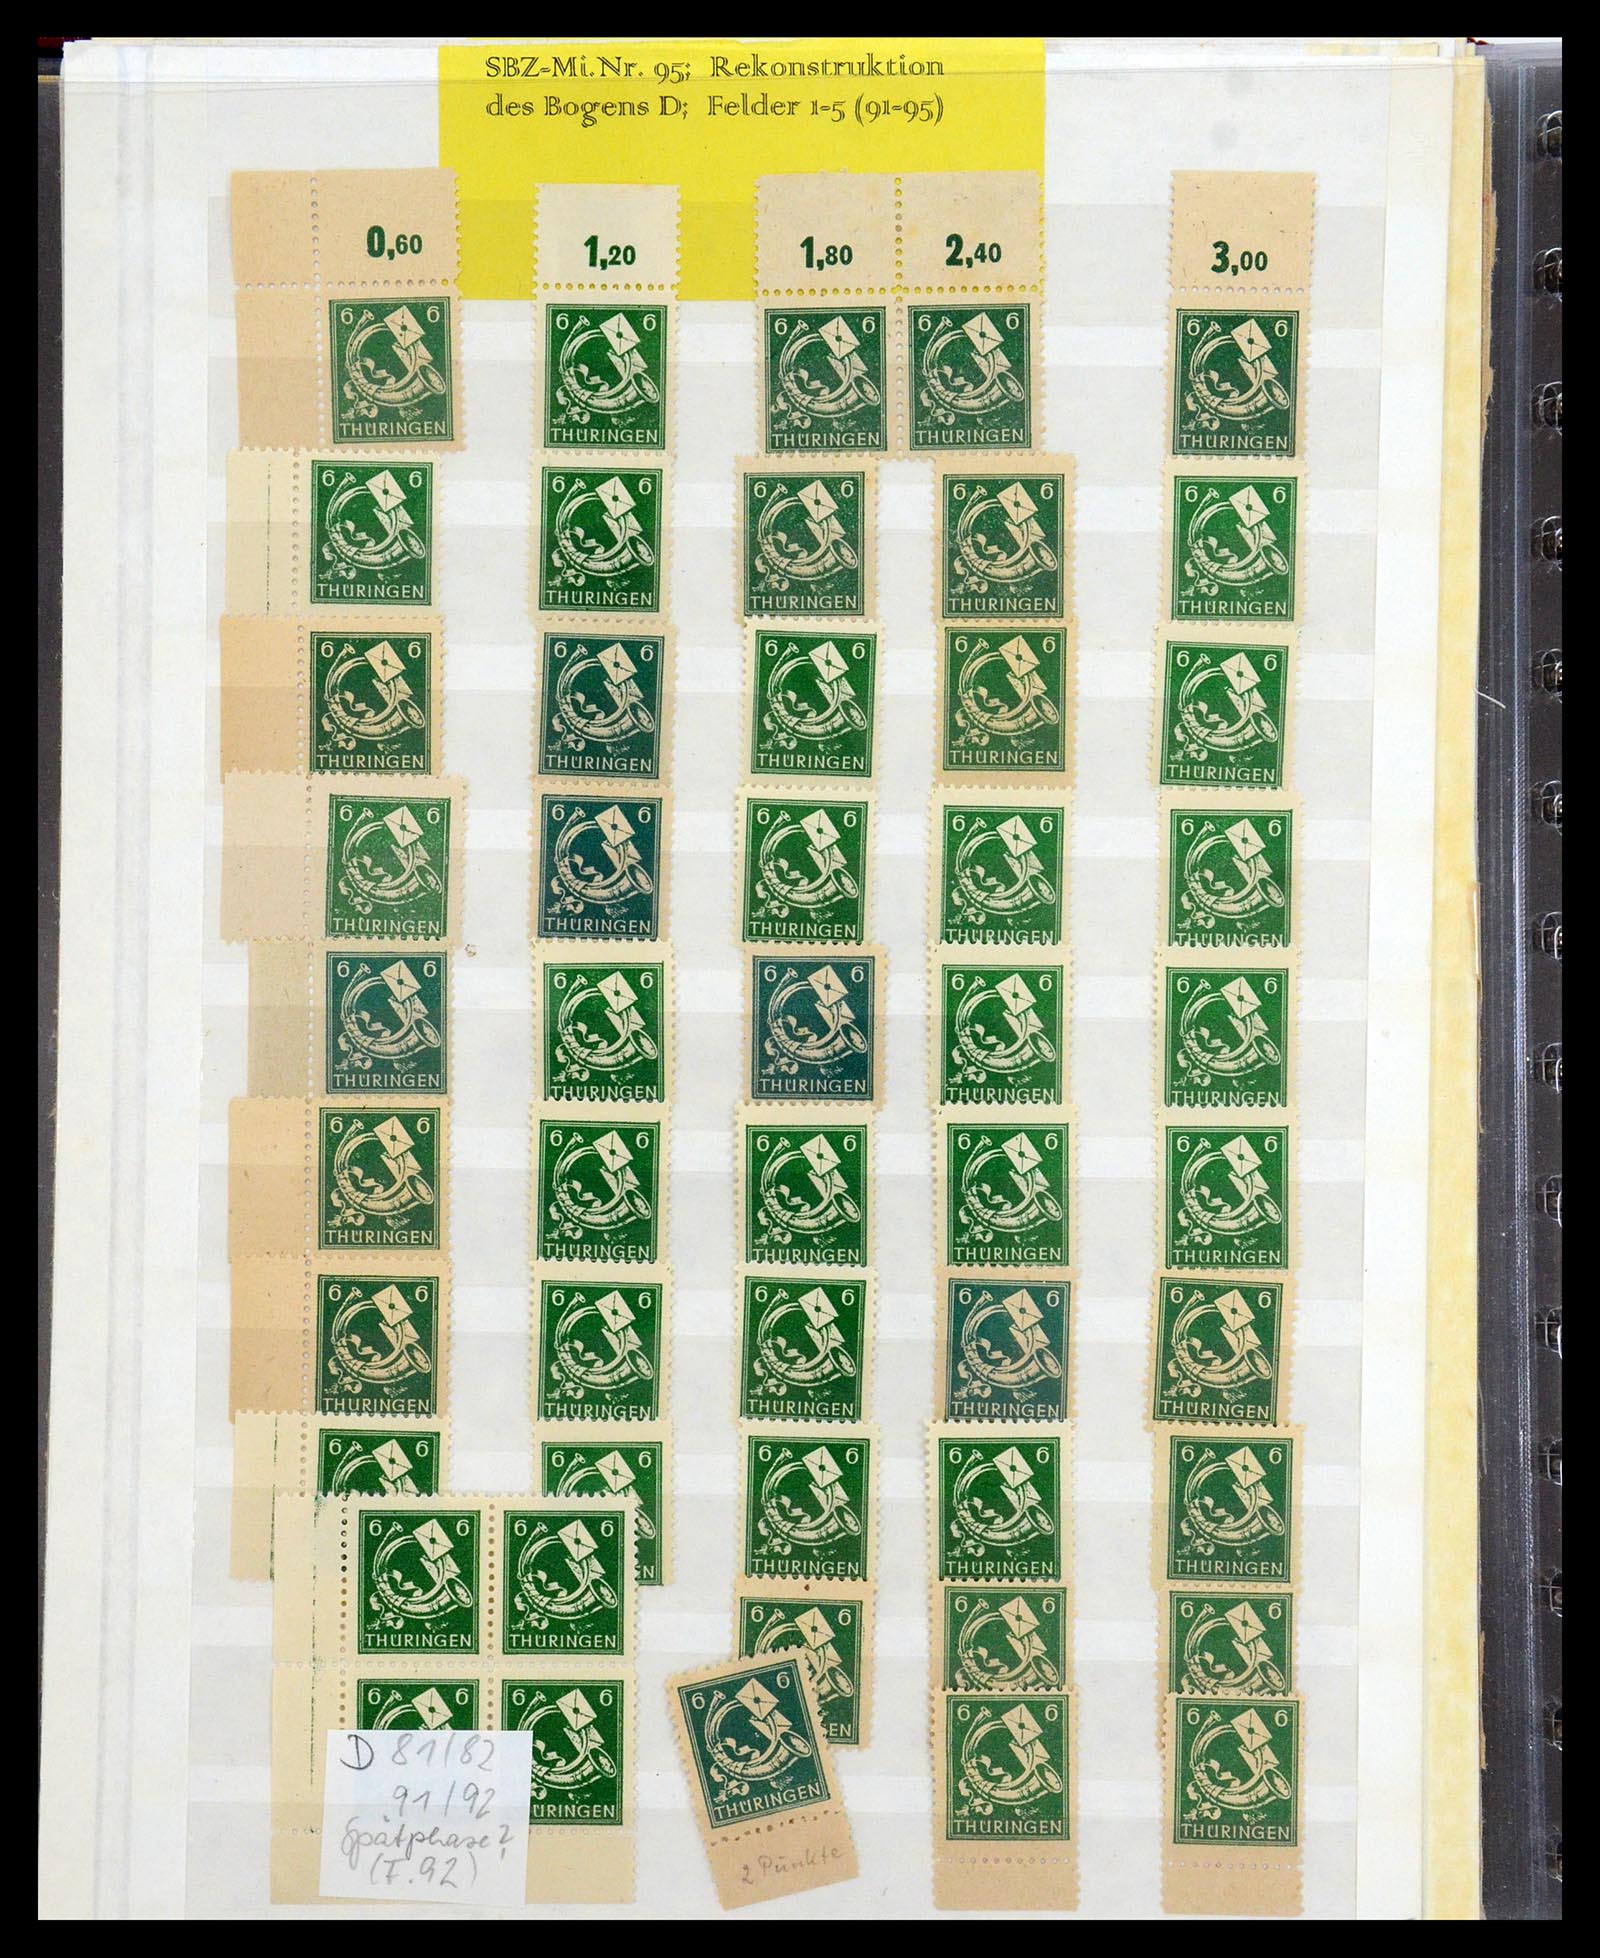 35264 019 - Stamp Collection 35264 Soviet Zone 1945-1948.